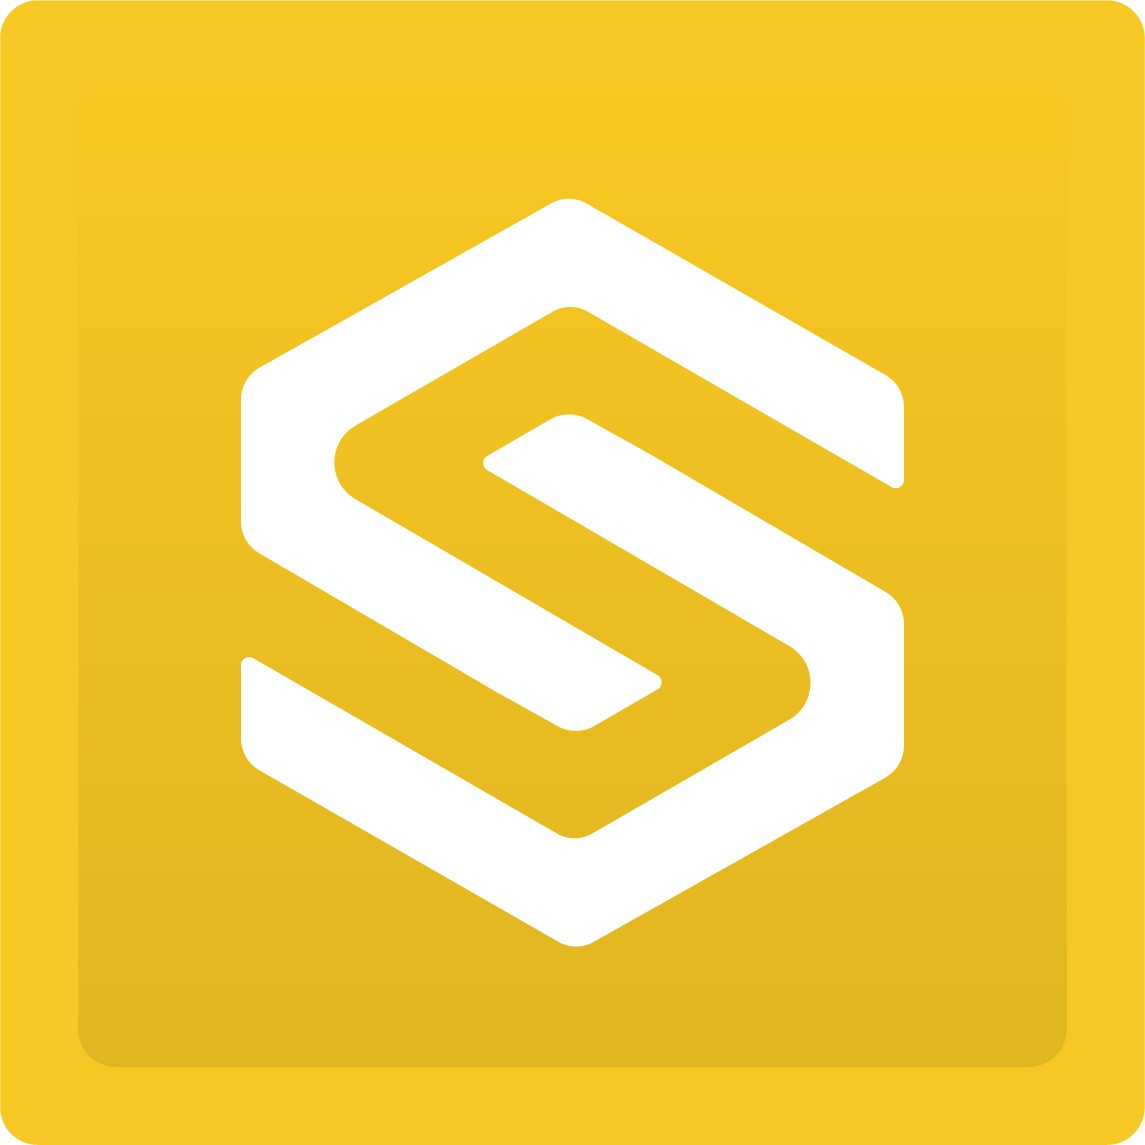 Solum Global logo.jpg